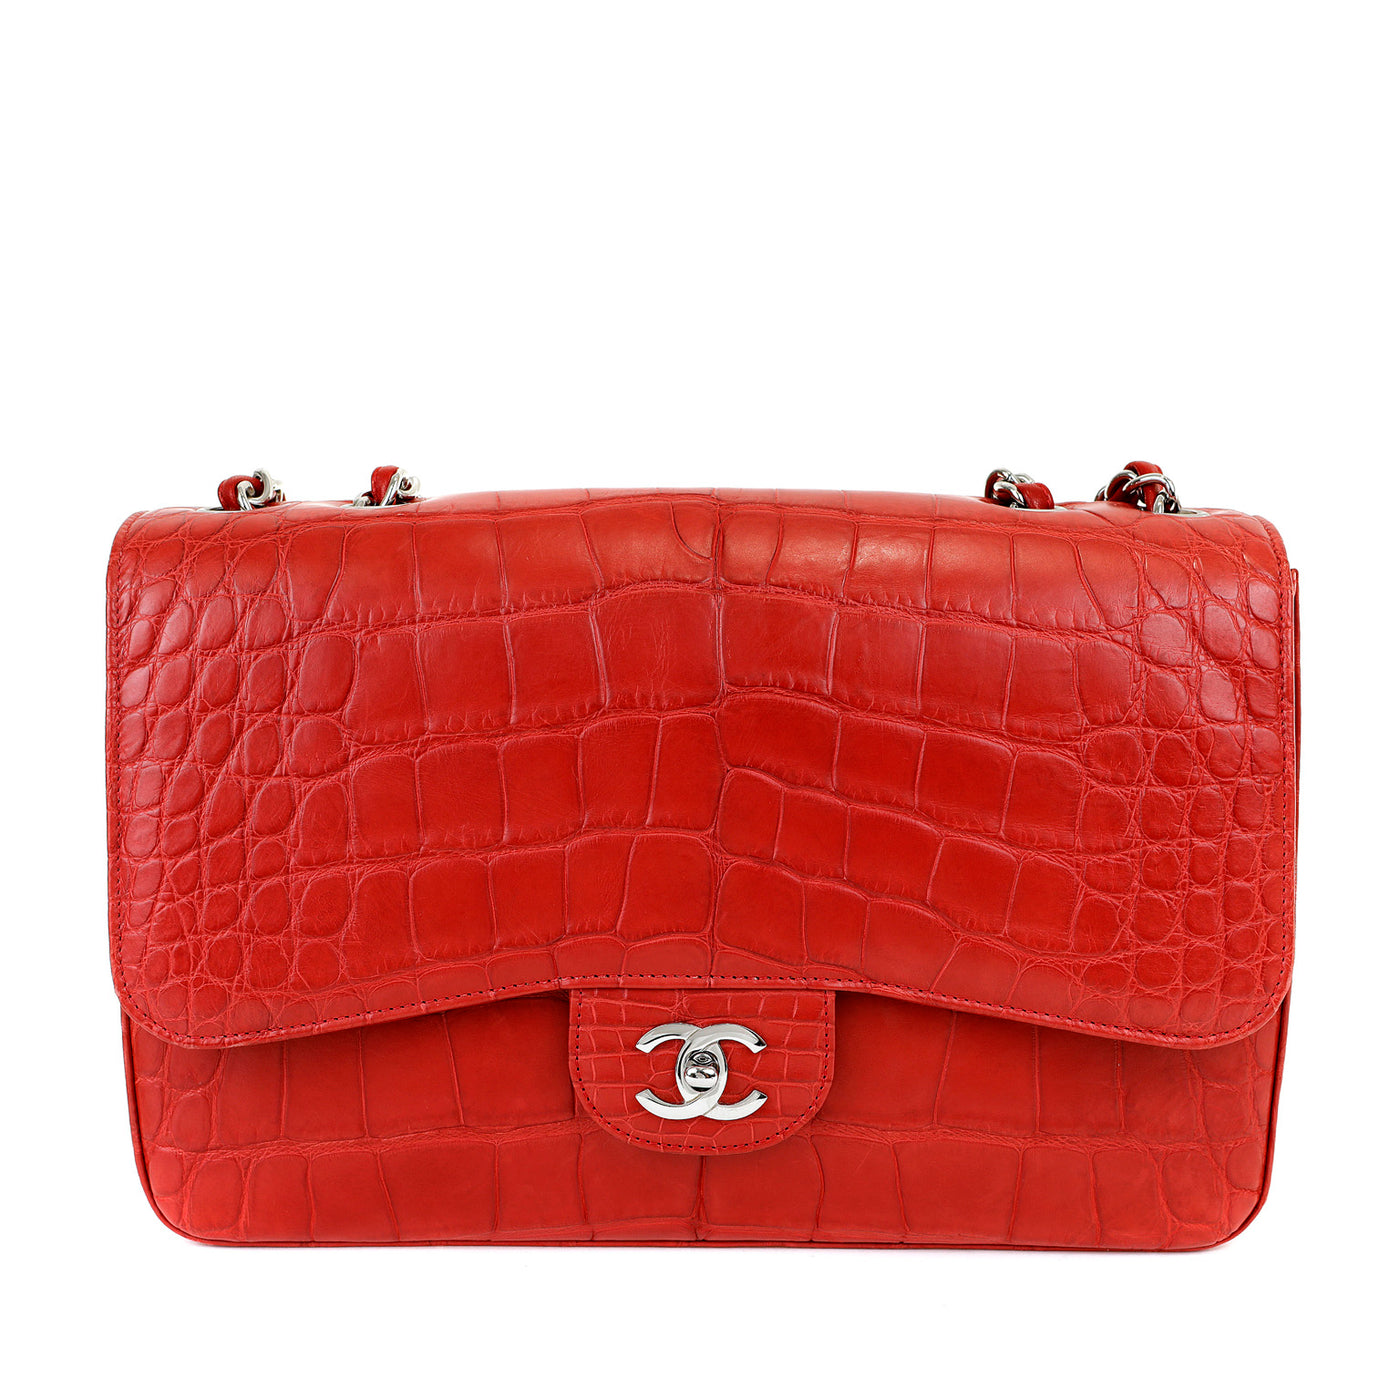 This Chanel Red Crocodile Jumbo Classic is a stunning luxury